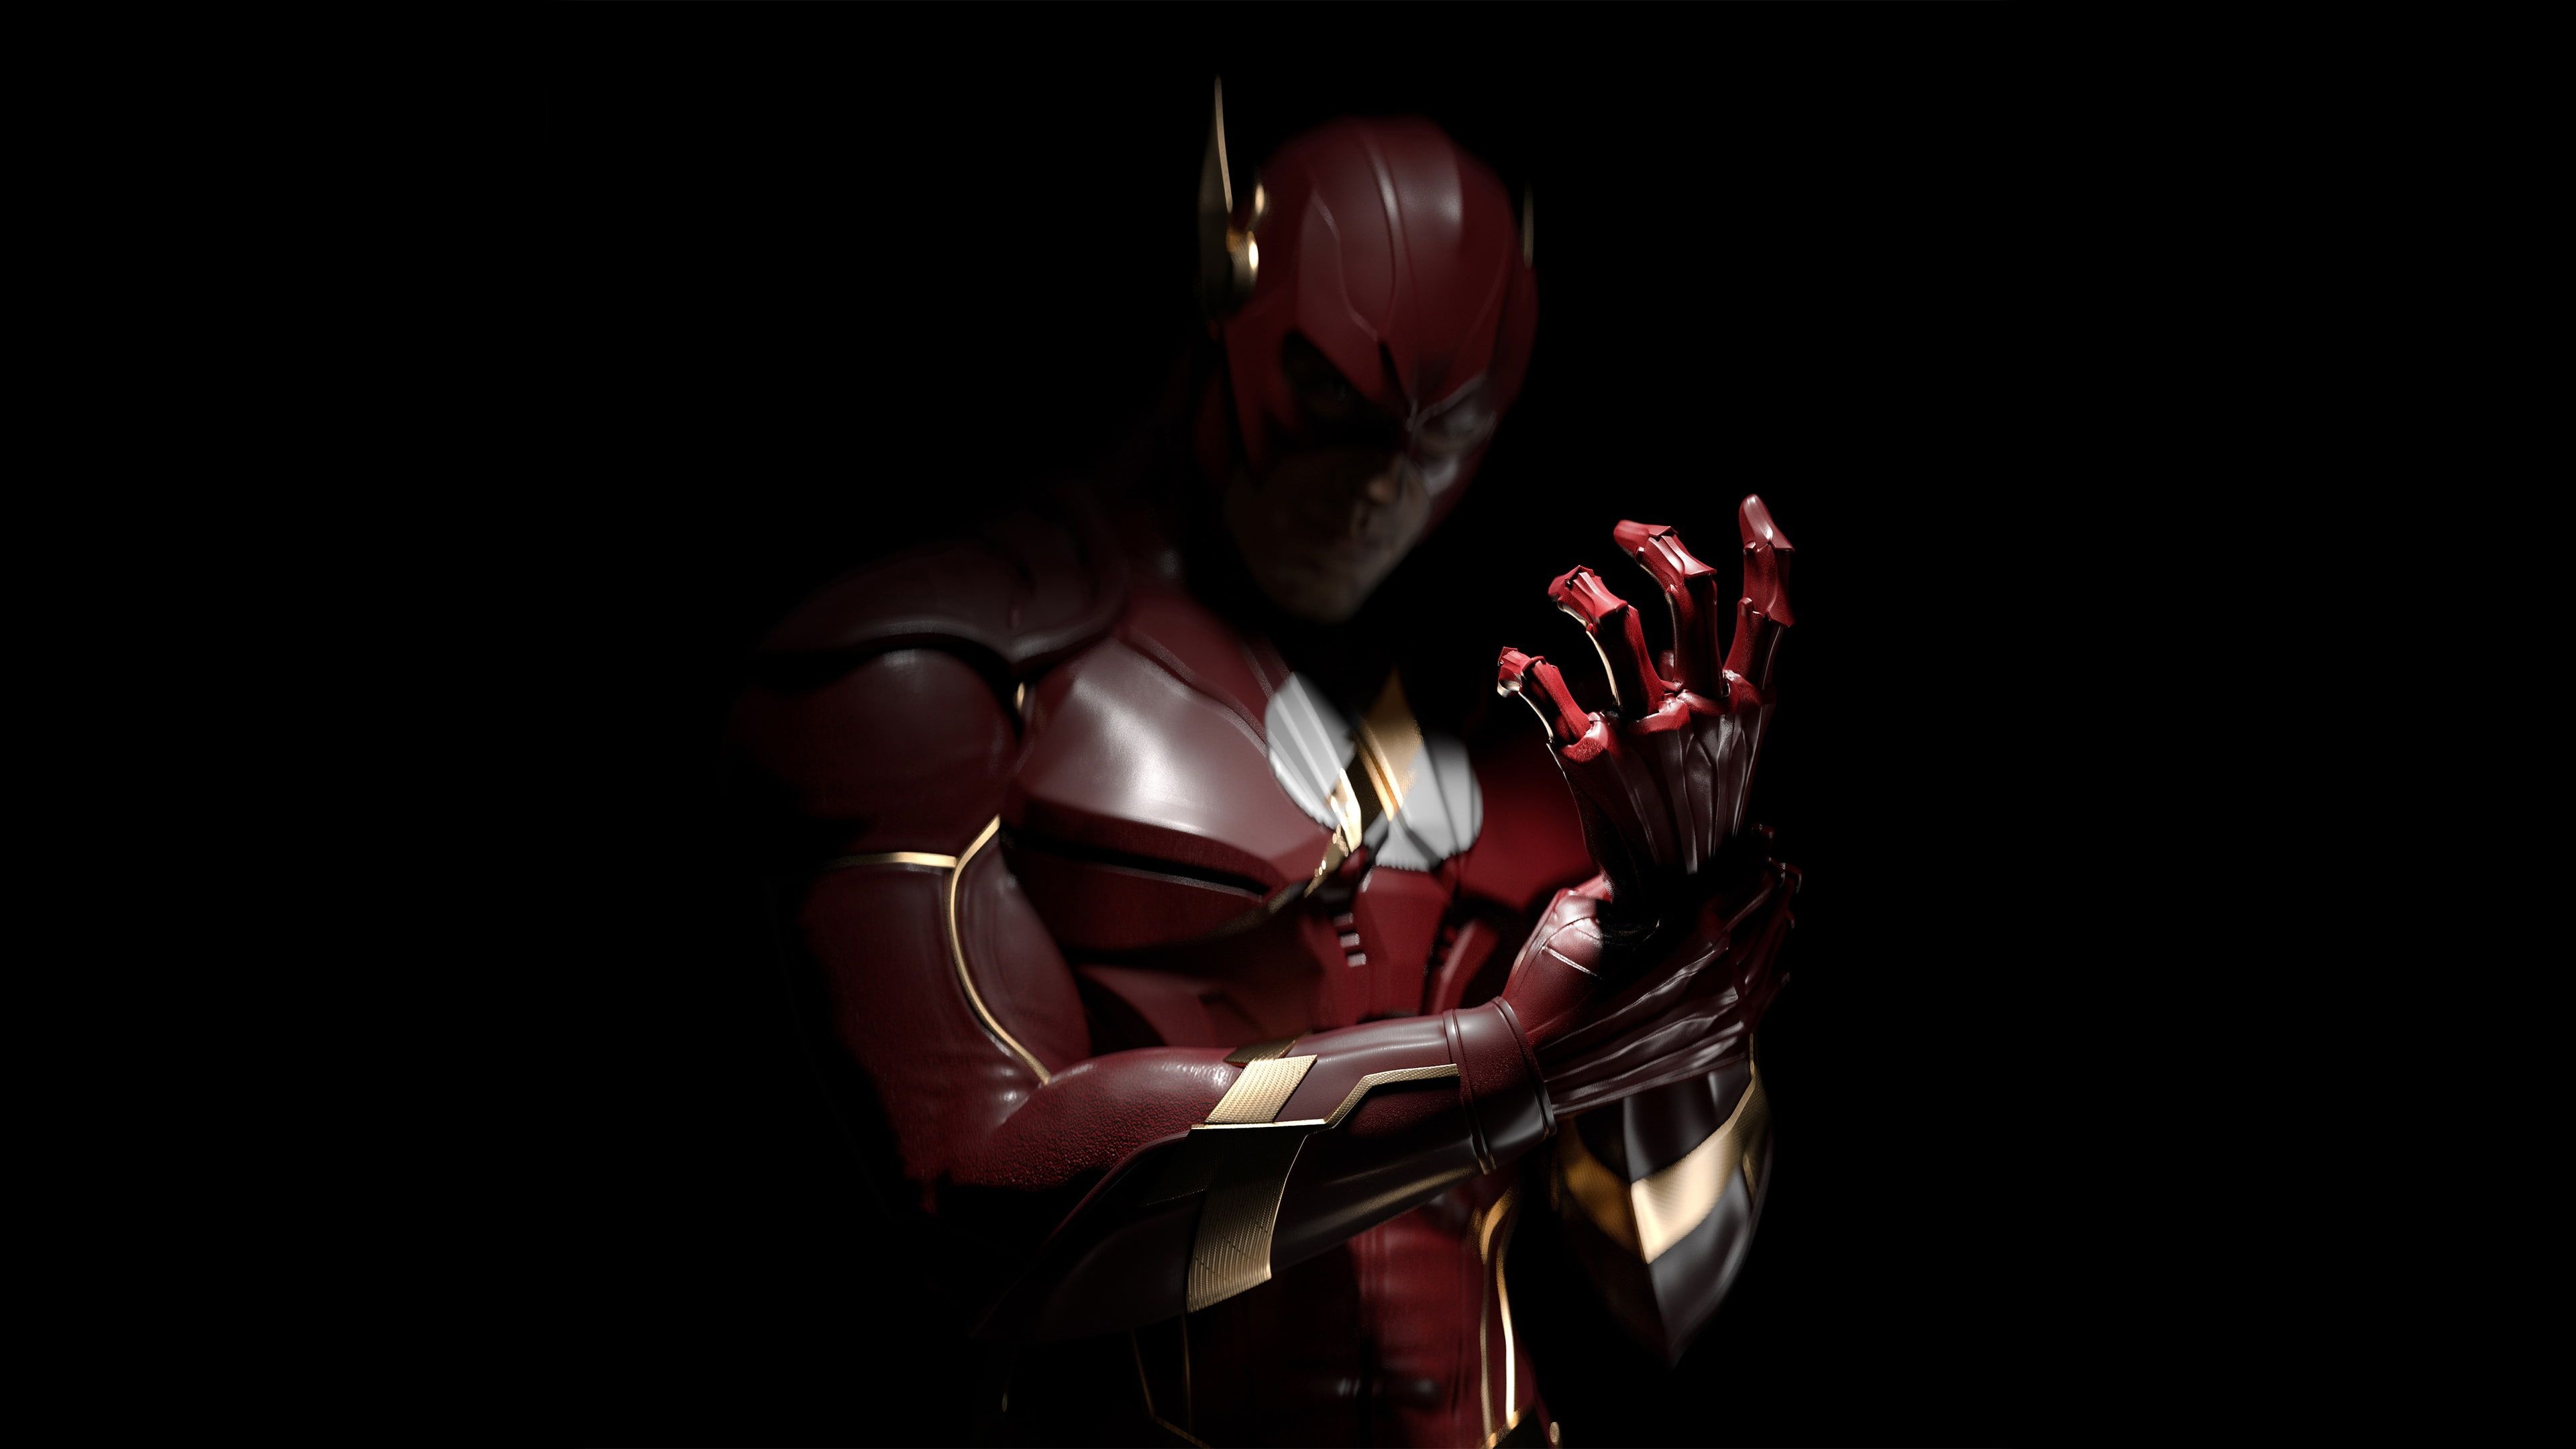 HD wallpaper, Barry Allen, Injustice 2, Dc Comics, Black Background, The Flash